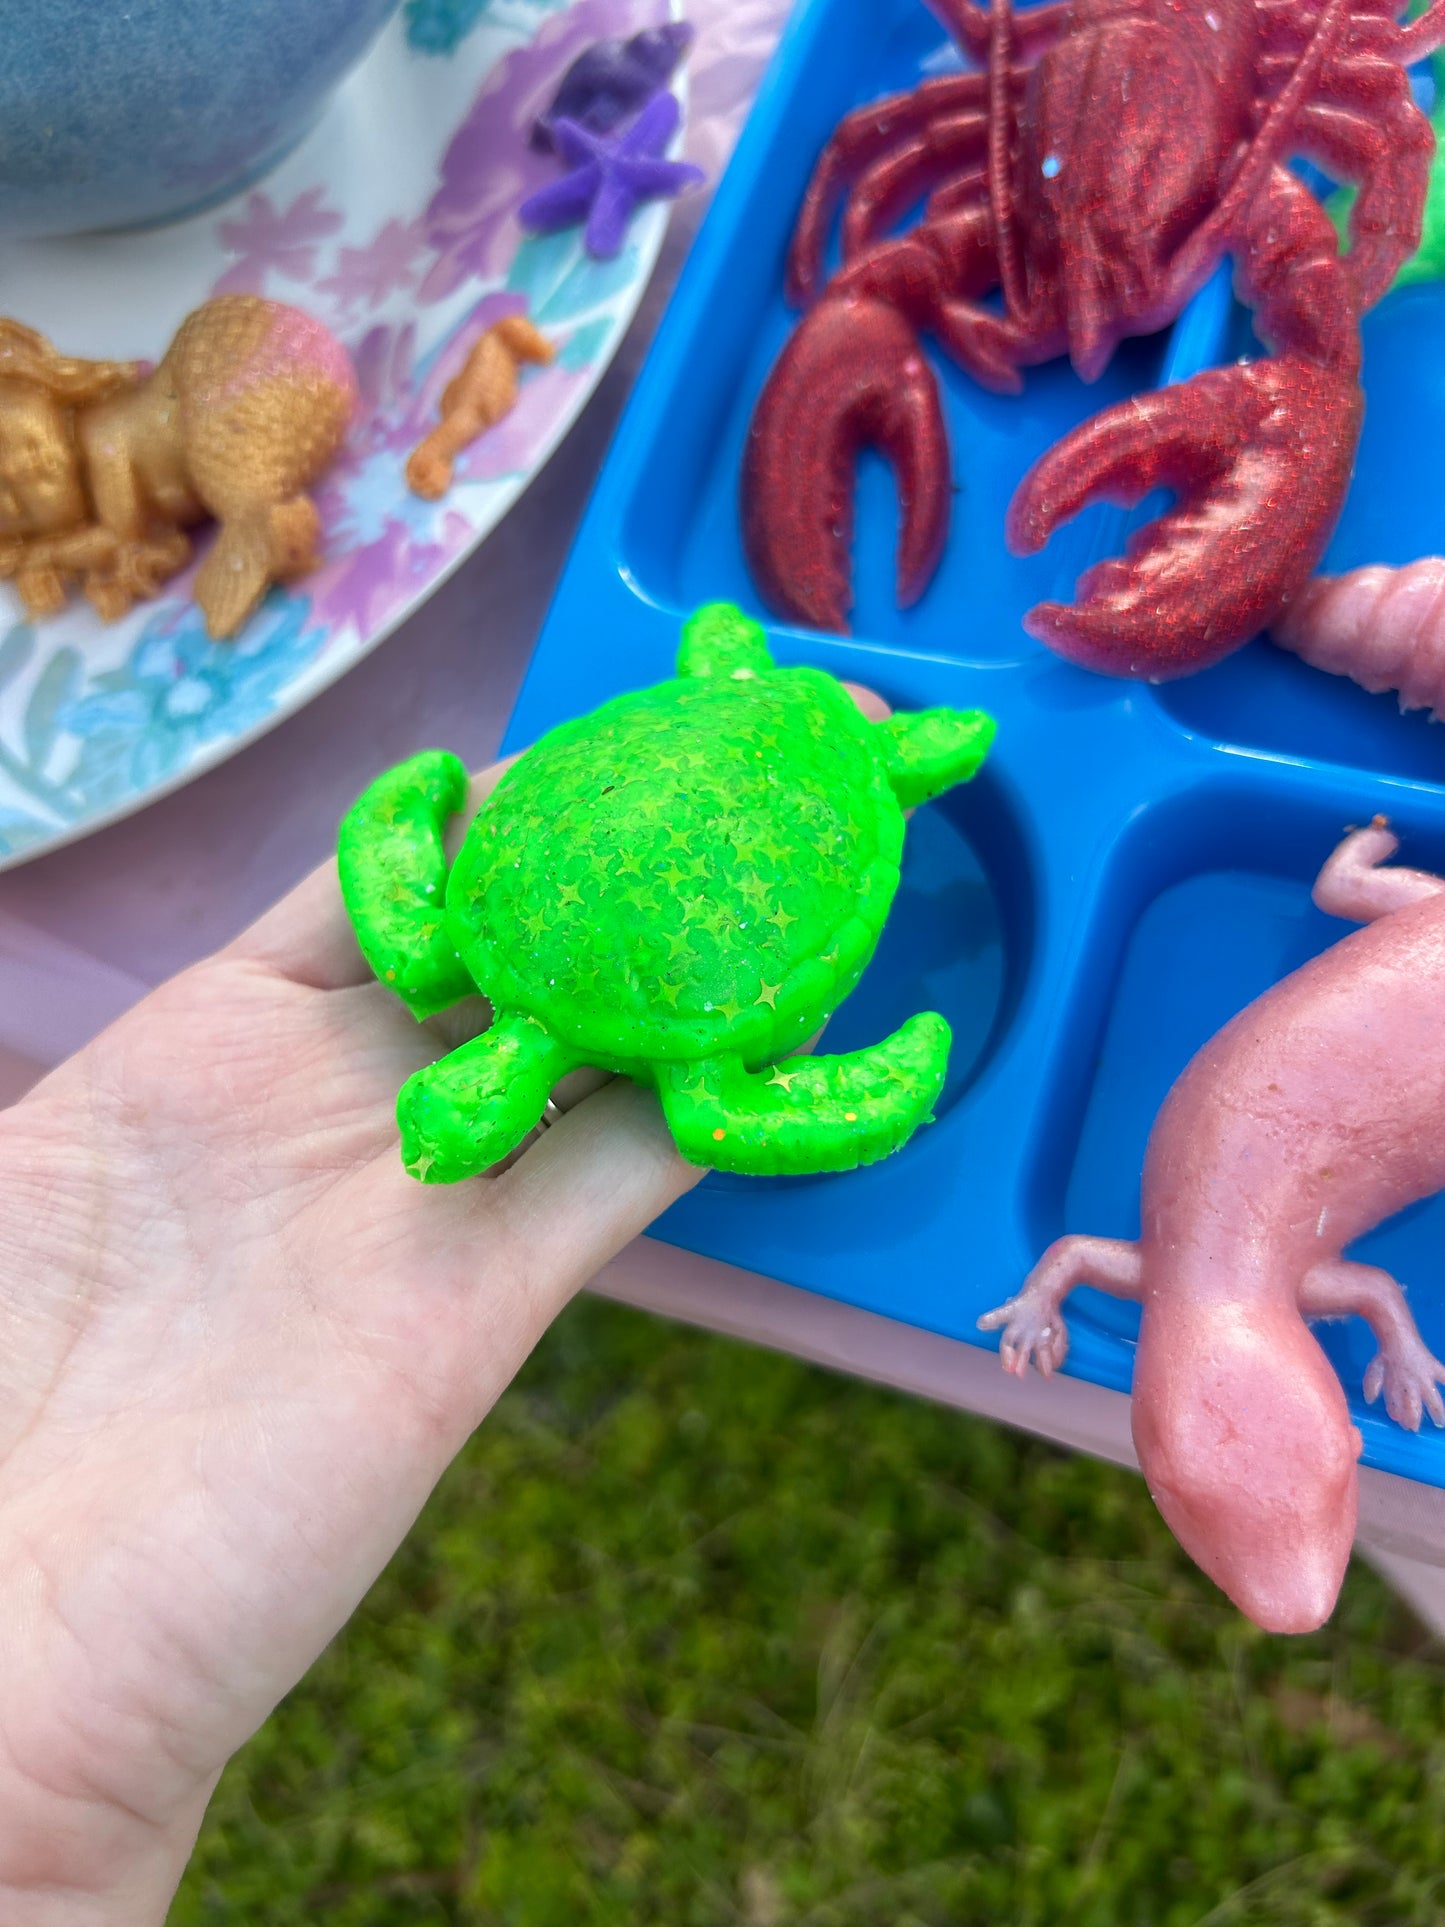 Silicone Squishy Toy - lizard, axolotl, or turtle